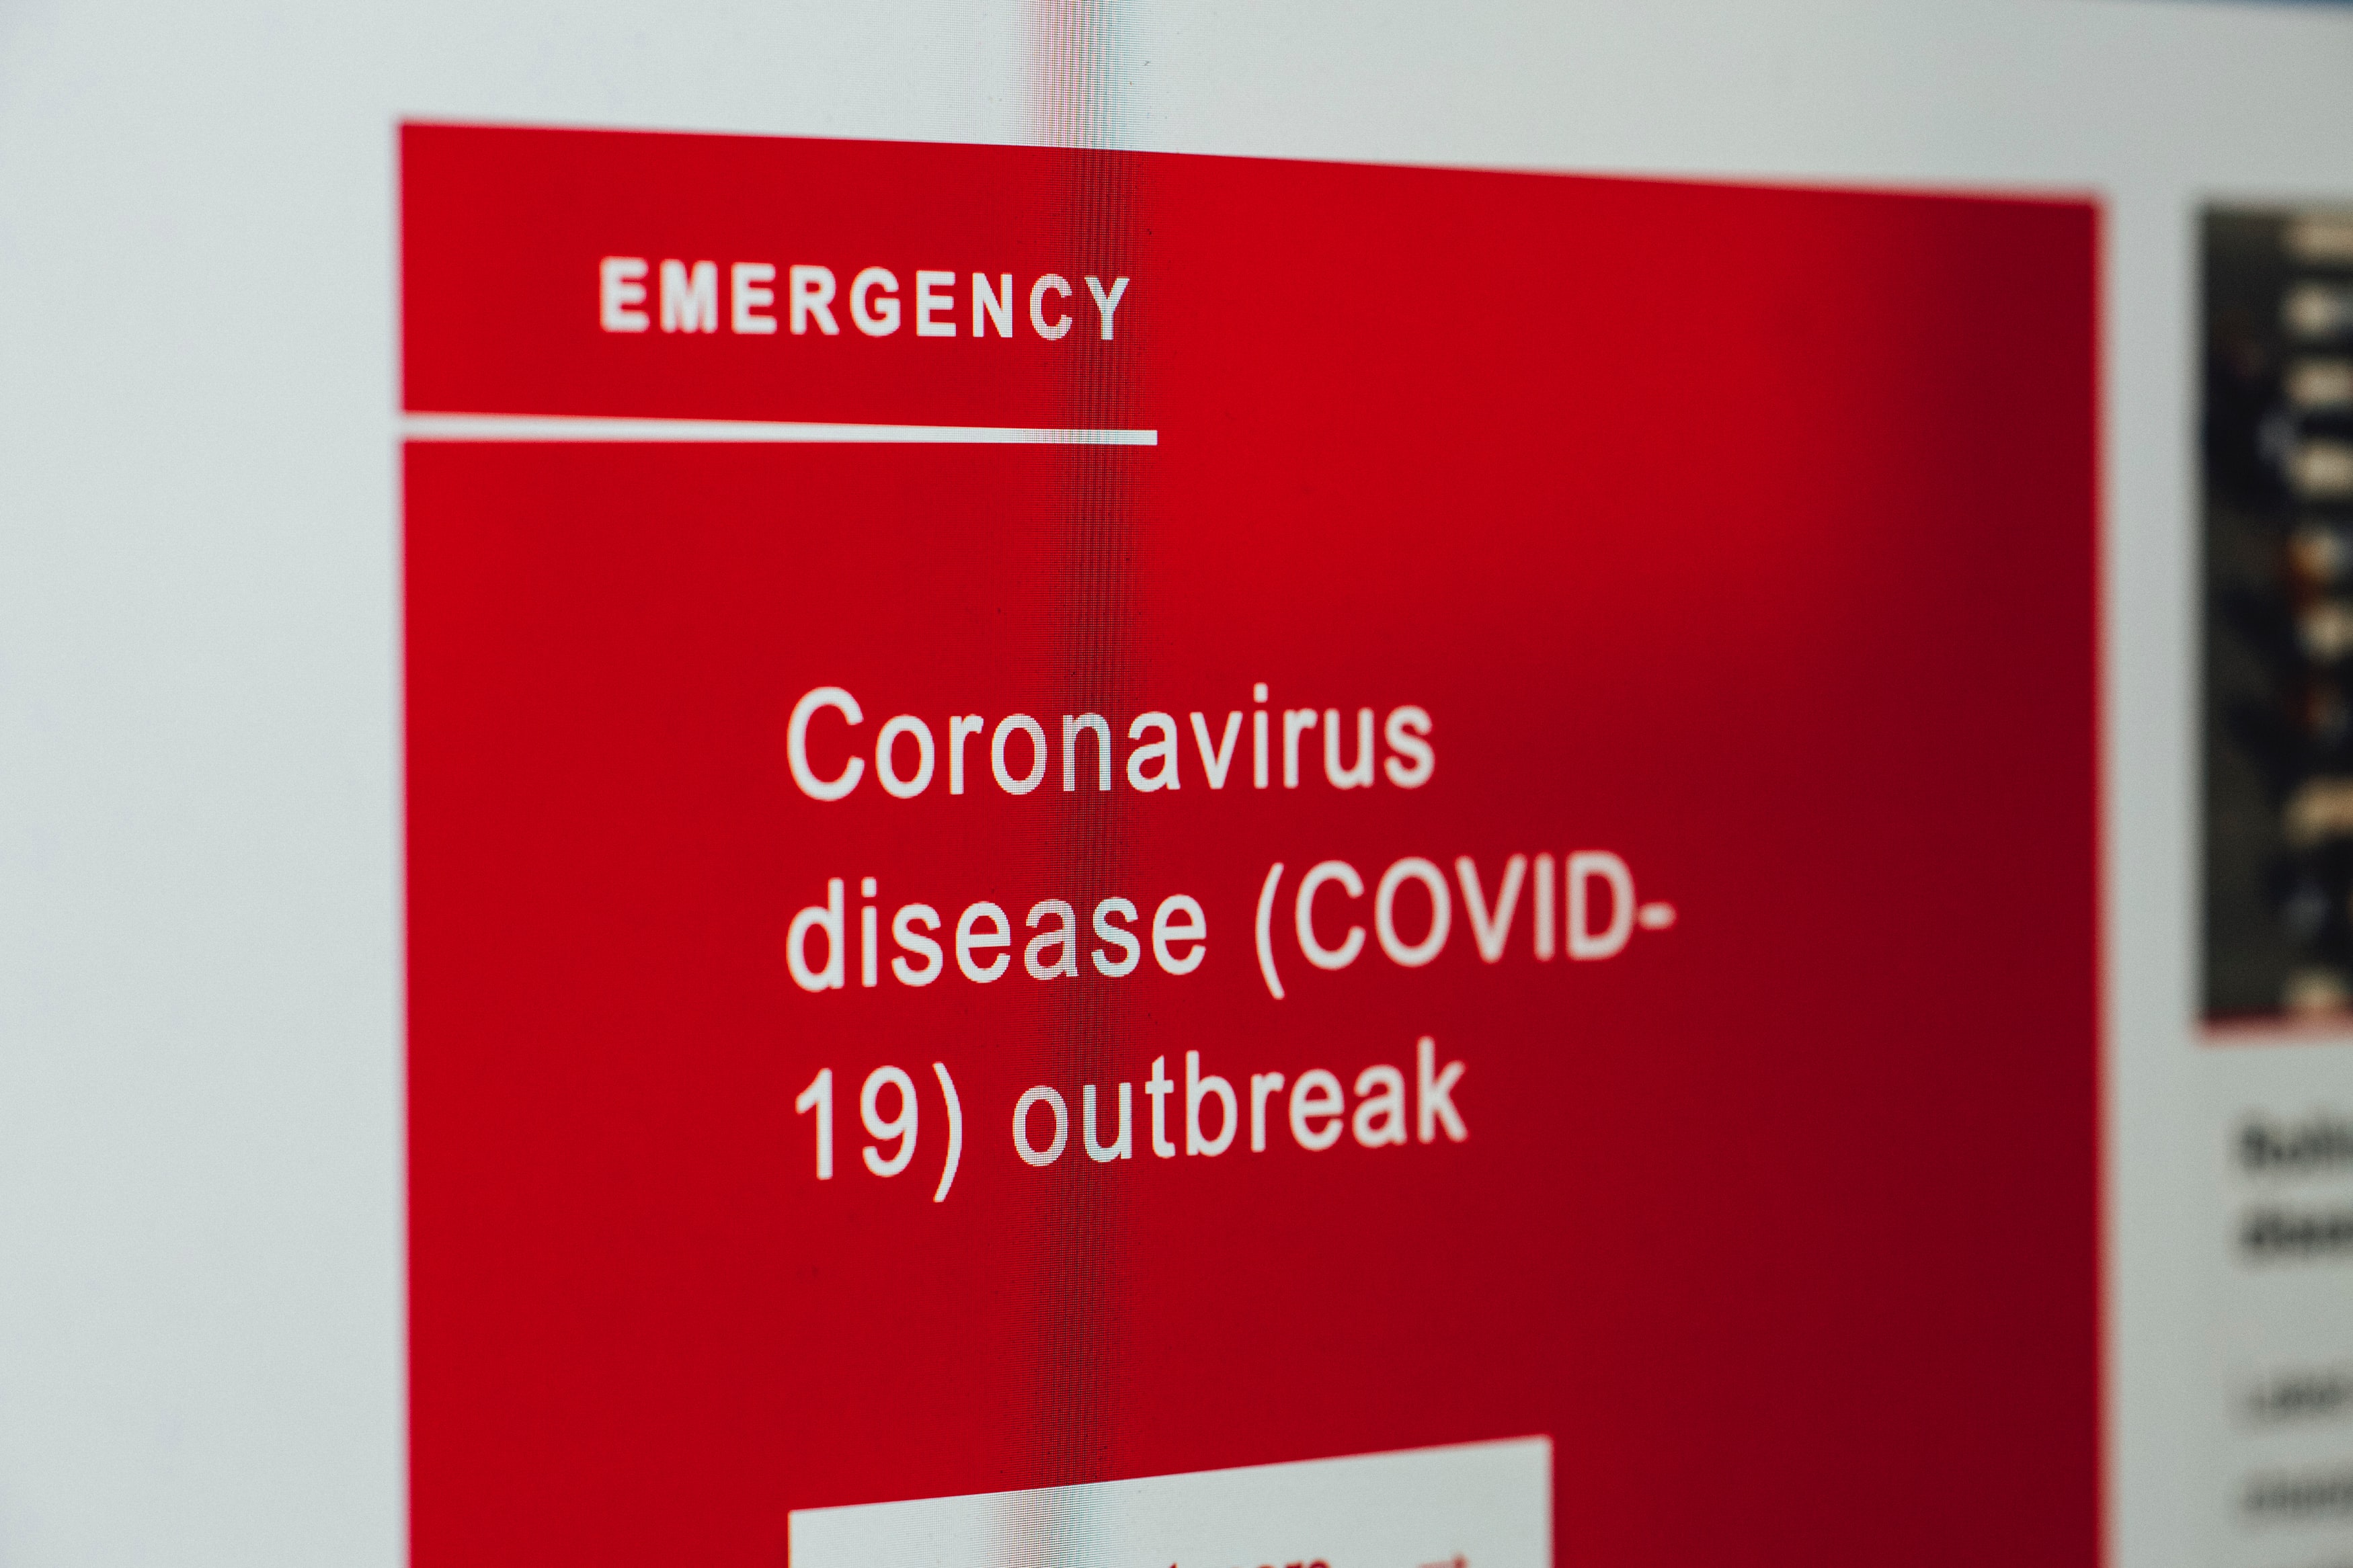 image of text on a computer screen: EMERGENCY Coronavirus disease (COVID-19) outbreak